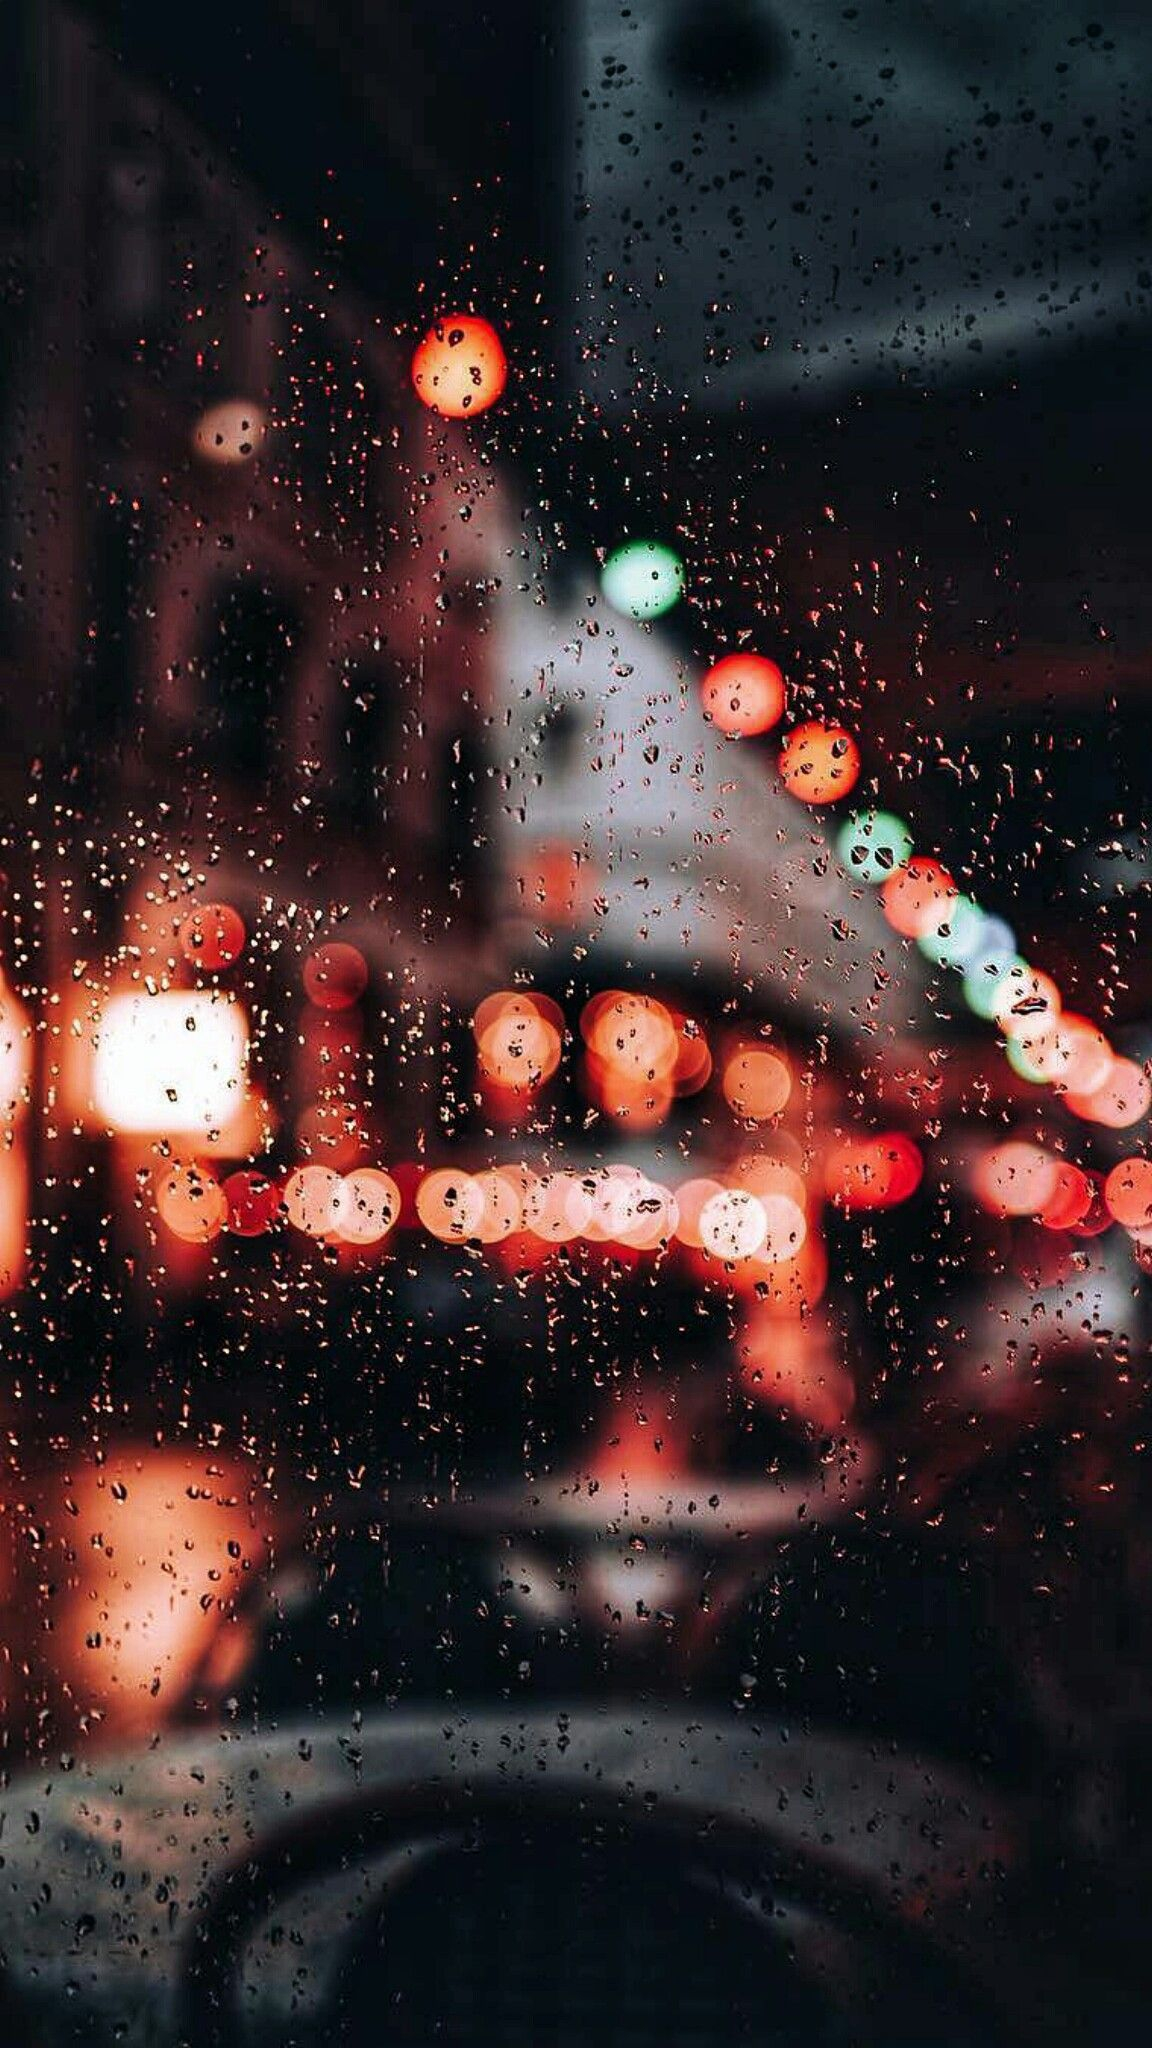 1152x2048 Raindrops and glass | Rainy wallpaper, Sunset wallpaper, Photography wallpaper